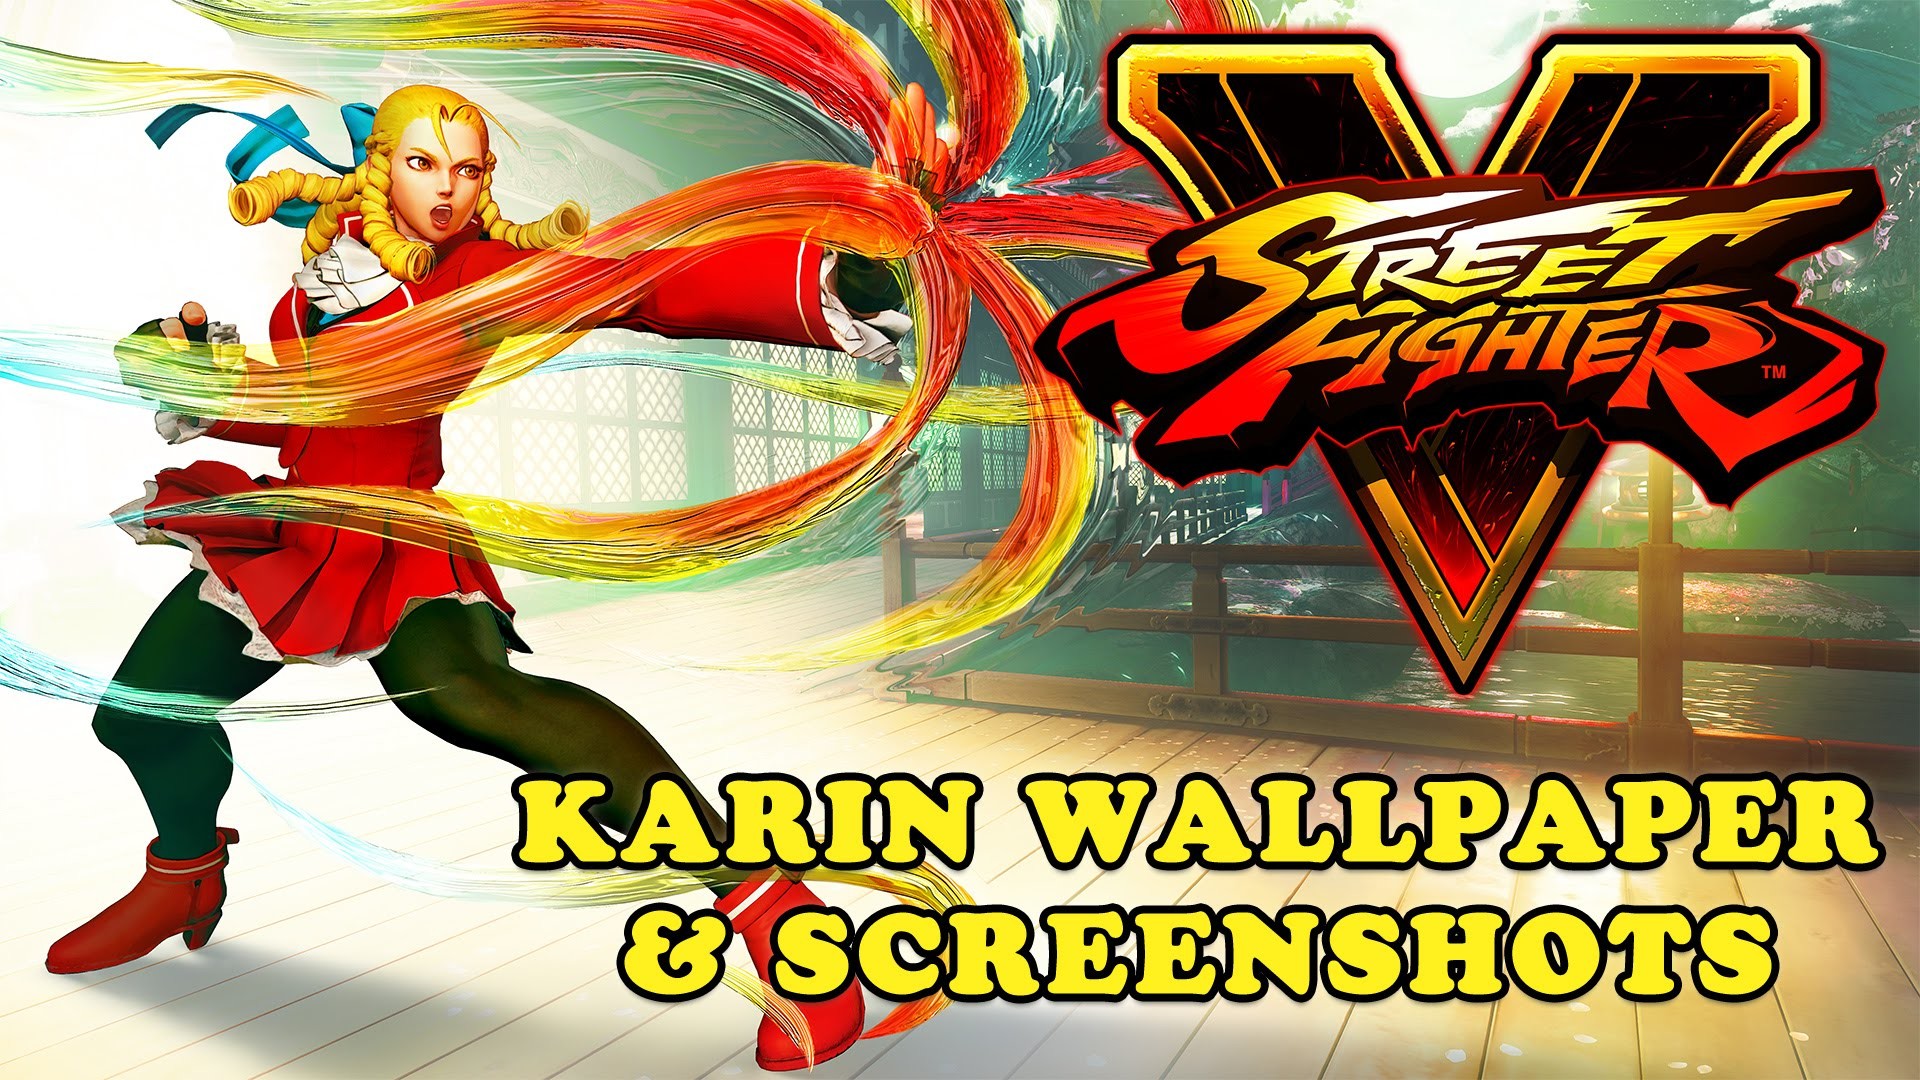 1920x1080 Street Fighter V - Karin Wallpaper and Screenshots (Download Link) - YouTube